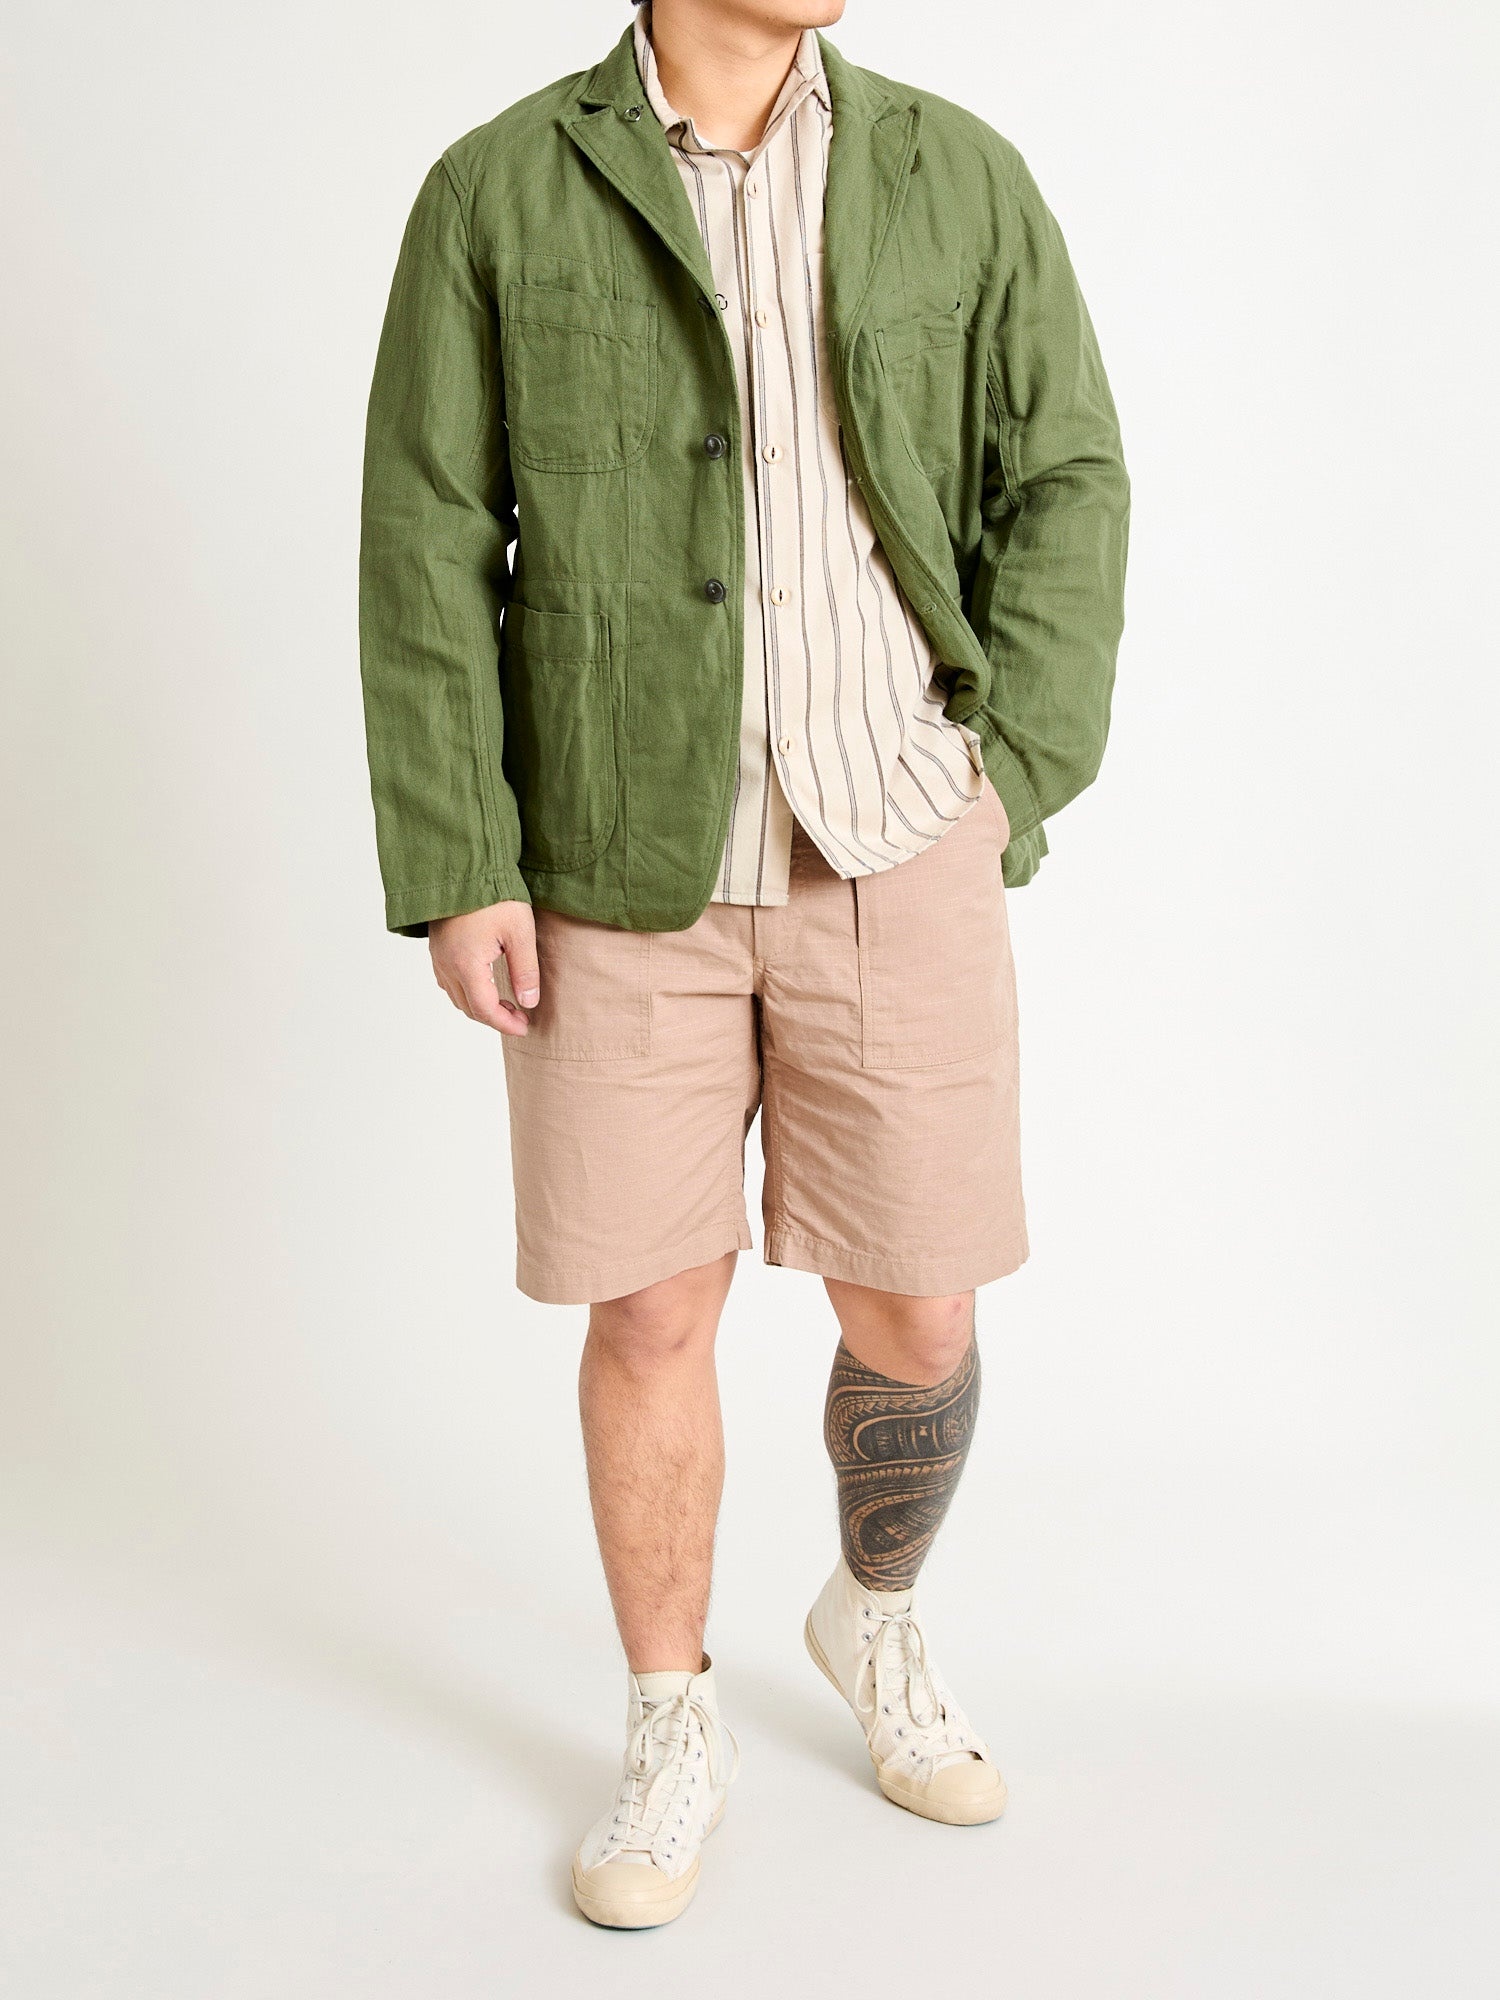 Bedford Jacket in Olive Cotton Hemp Satin - 12